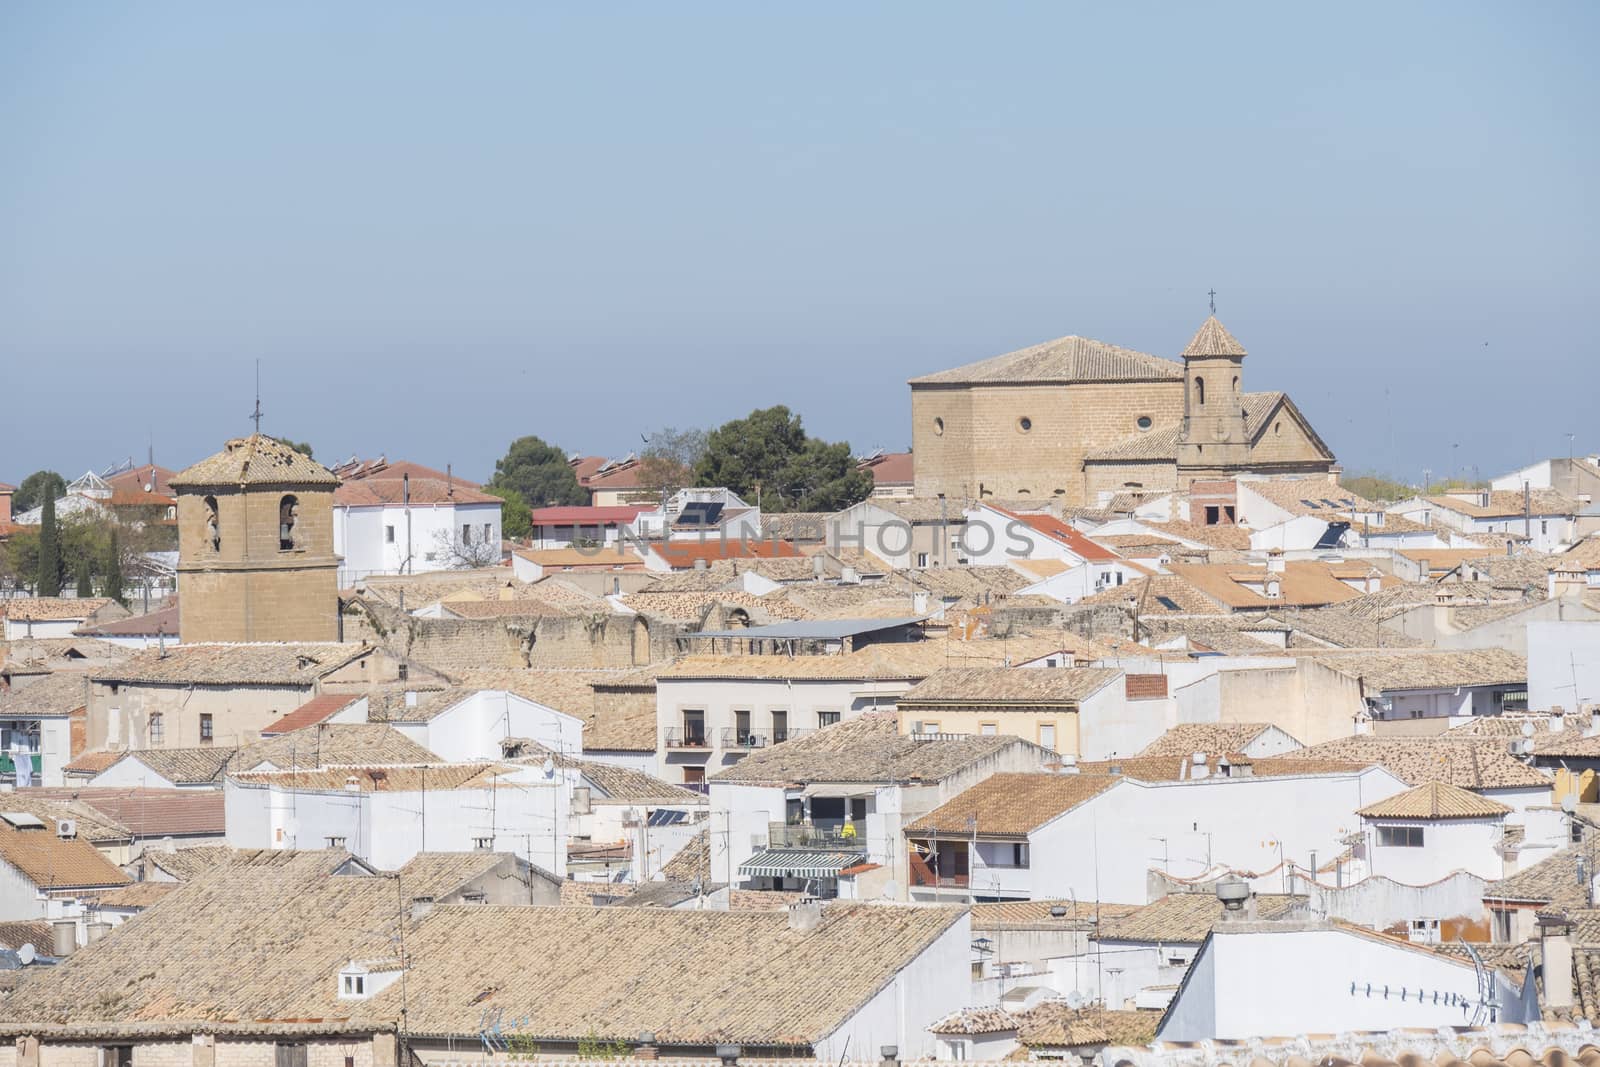 Baeza city (World Heritage Site), "Iglesia de los Descalzos" and "Iglesia del Salvador" in the background, Jaen, Spain